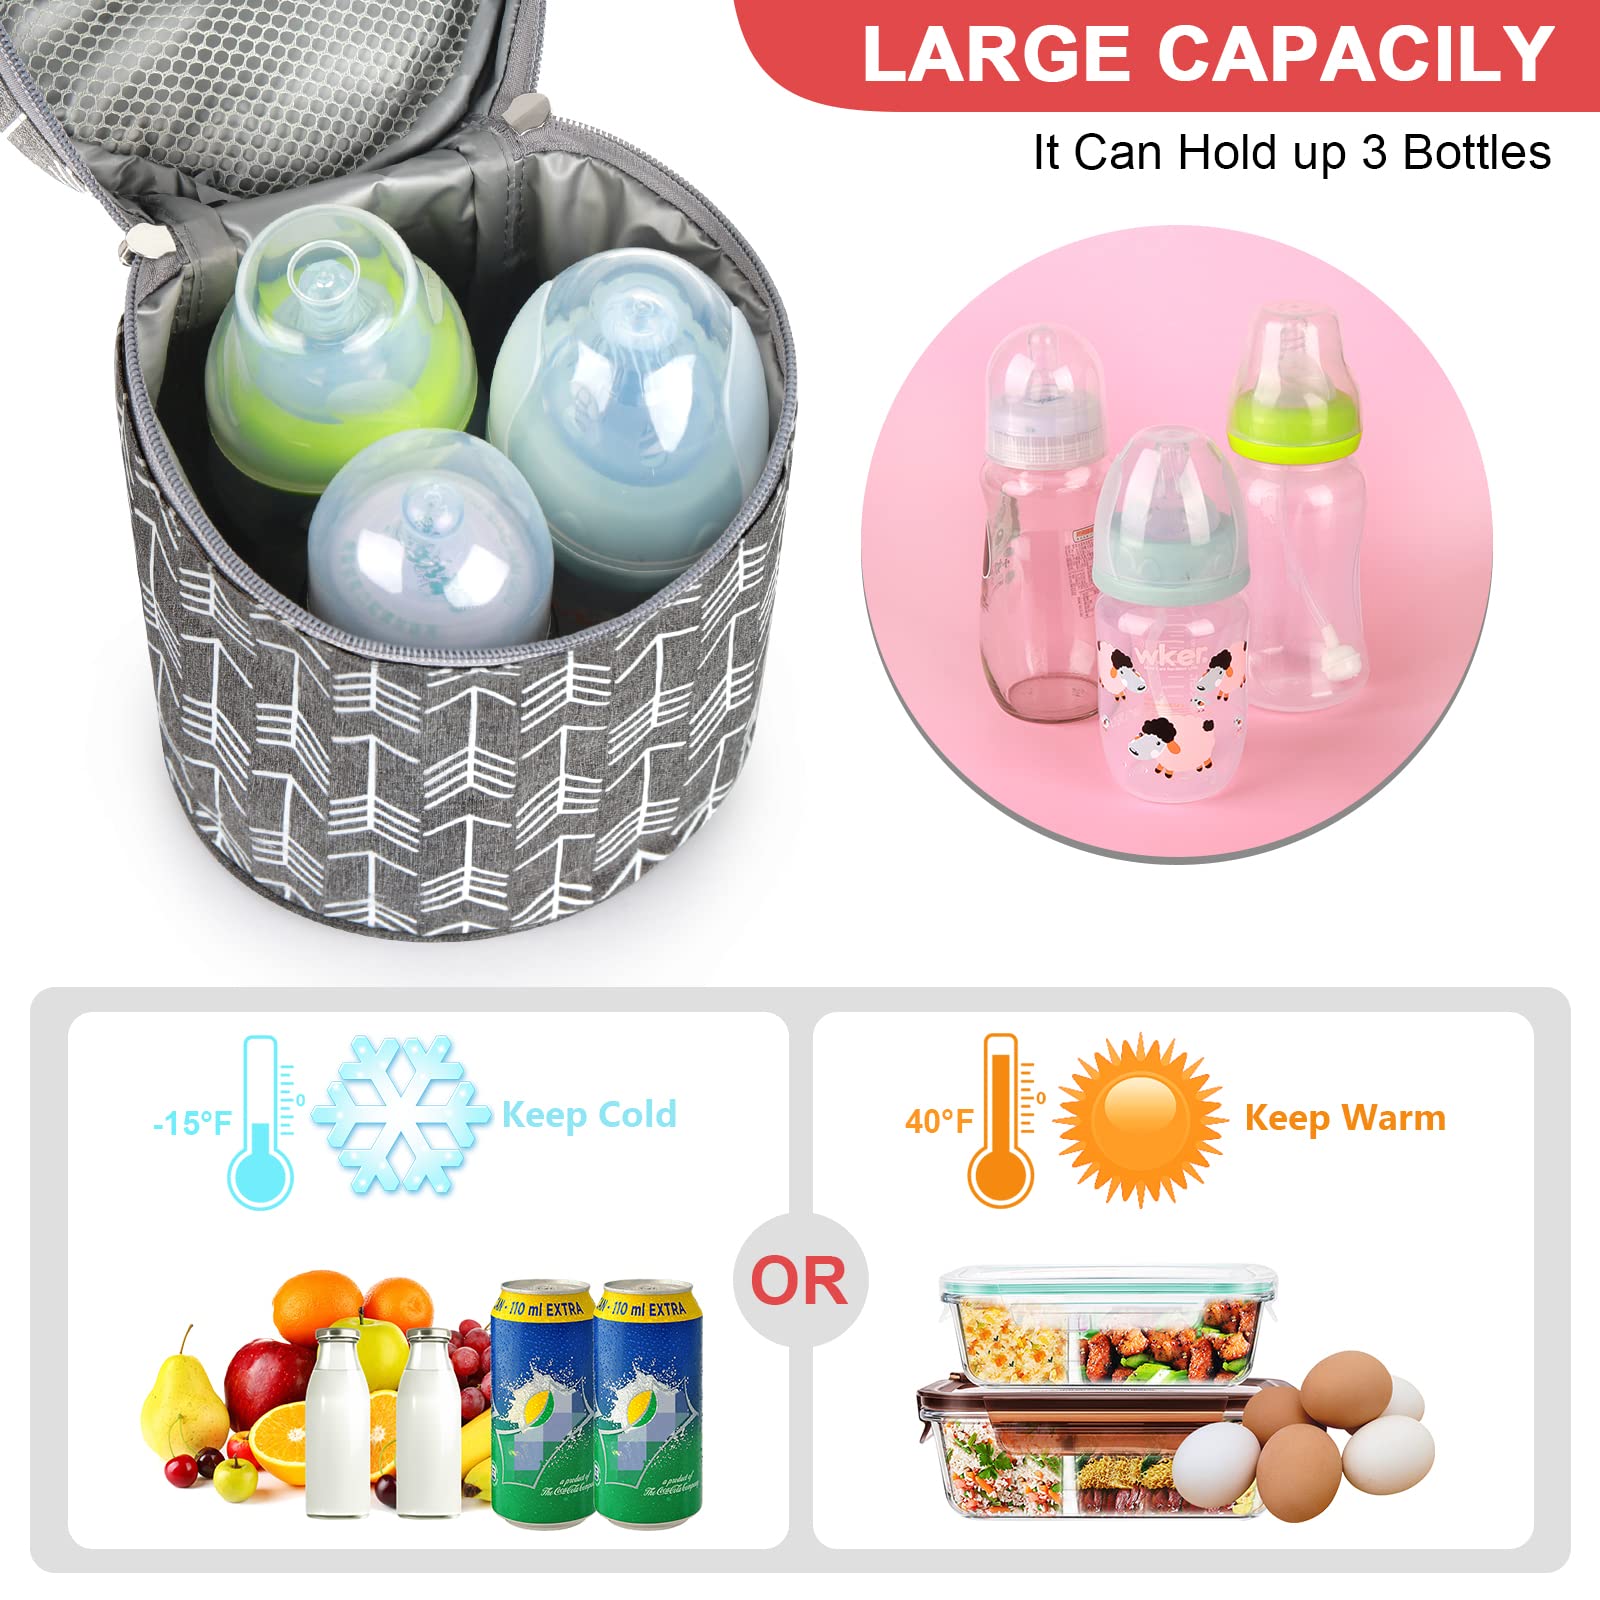 Accmor Breastmilk Cooler Bag, Insulated Baby Bottle Cooler Tote Bags, Baby Bottle Warmer Cooler Bag, Baby Bottle Bag Great for Nursing Mom Daycare, Grey